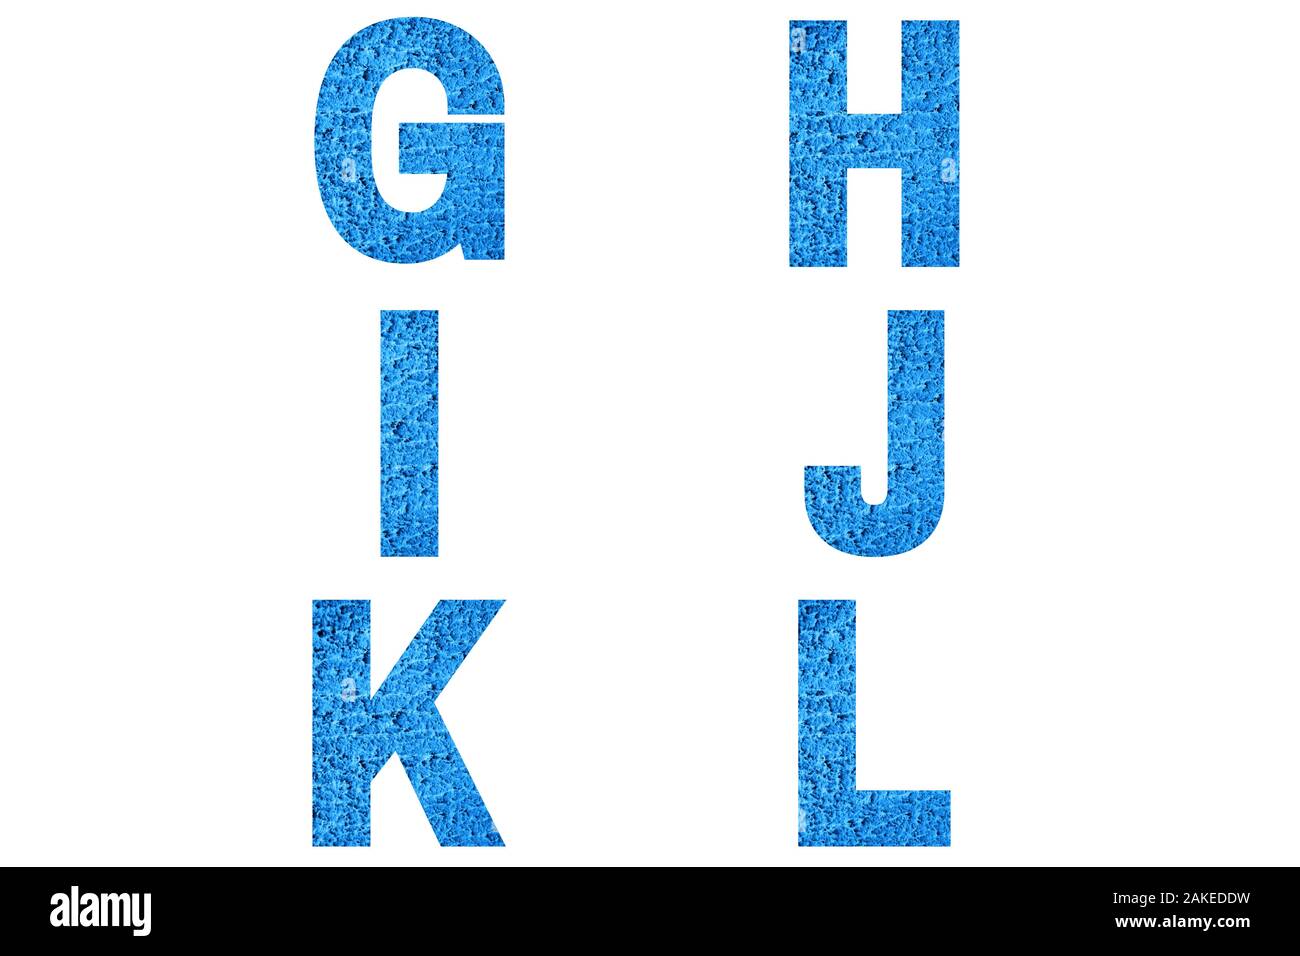 Font Alphabet g, h, i, j, k, l made of trendy blue color house front. Stock Photo